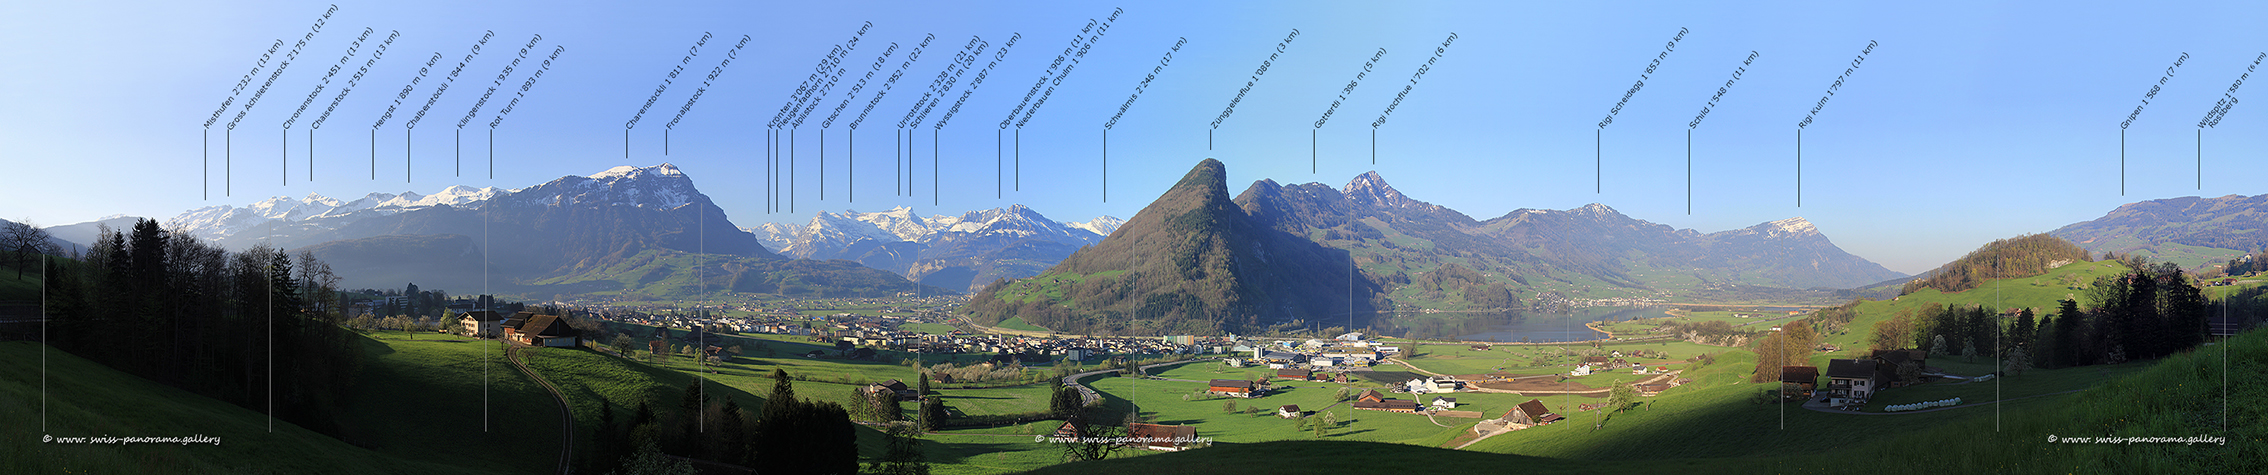 Schwyz Panorama Muotathal Rigi Urner Berge